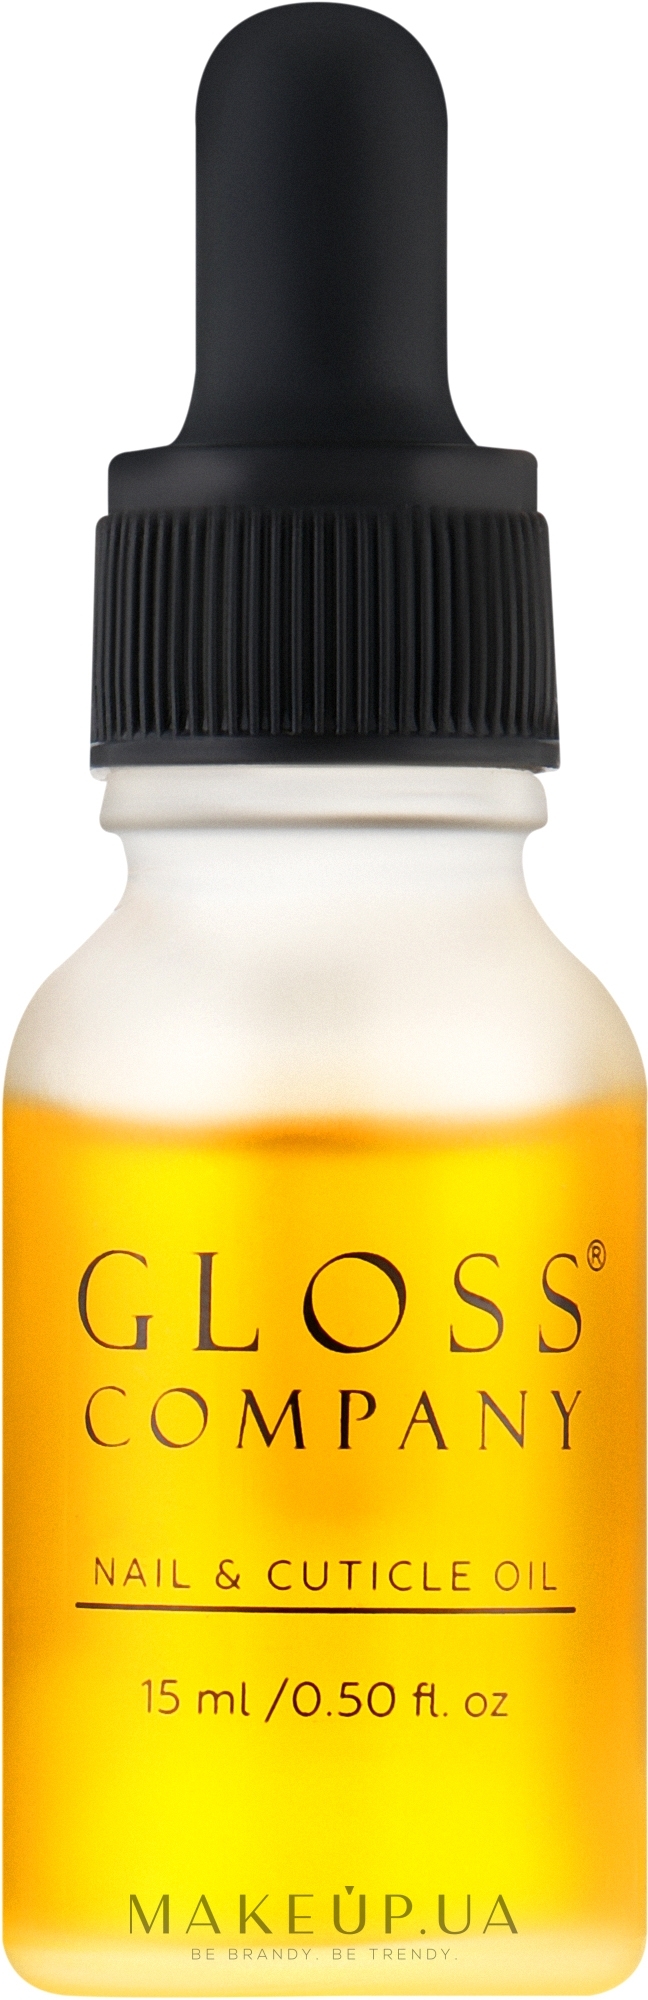 Масло для ногтей и кутикулы - Gloss Company Musk Rose Nail & Cuticle Oil — фото 15ml